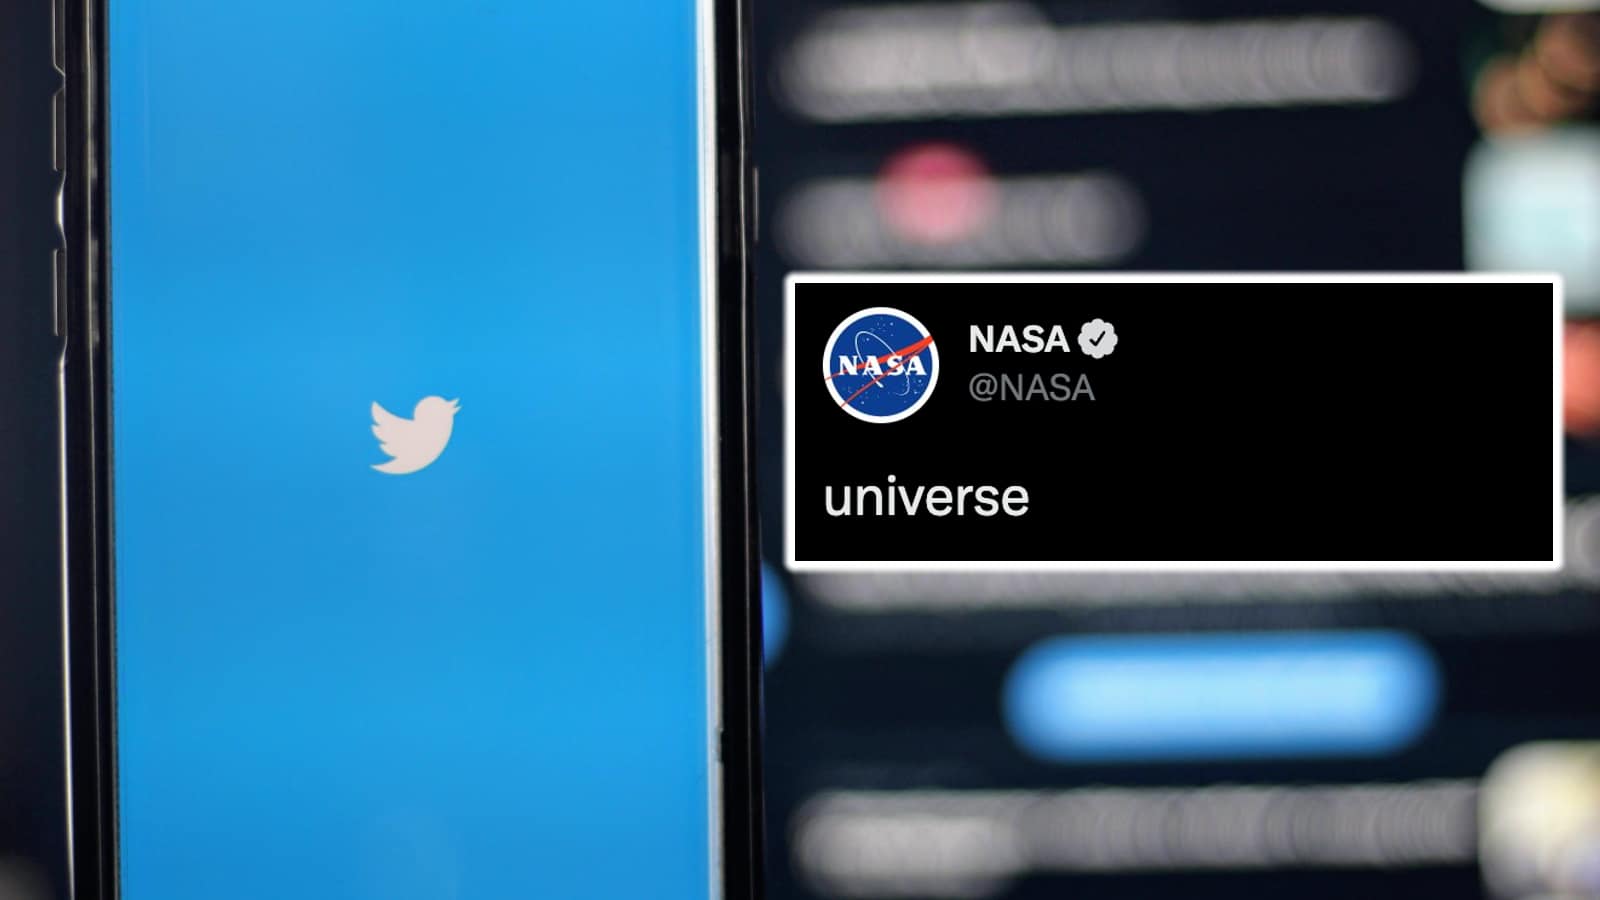 NASA tweet next to phone with Twitter logo on it